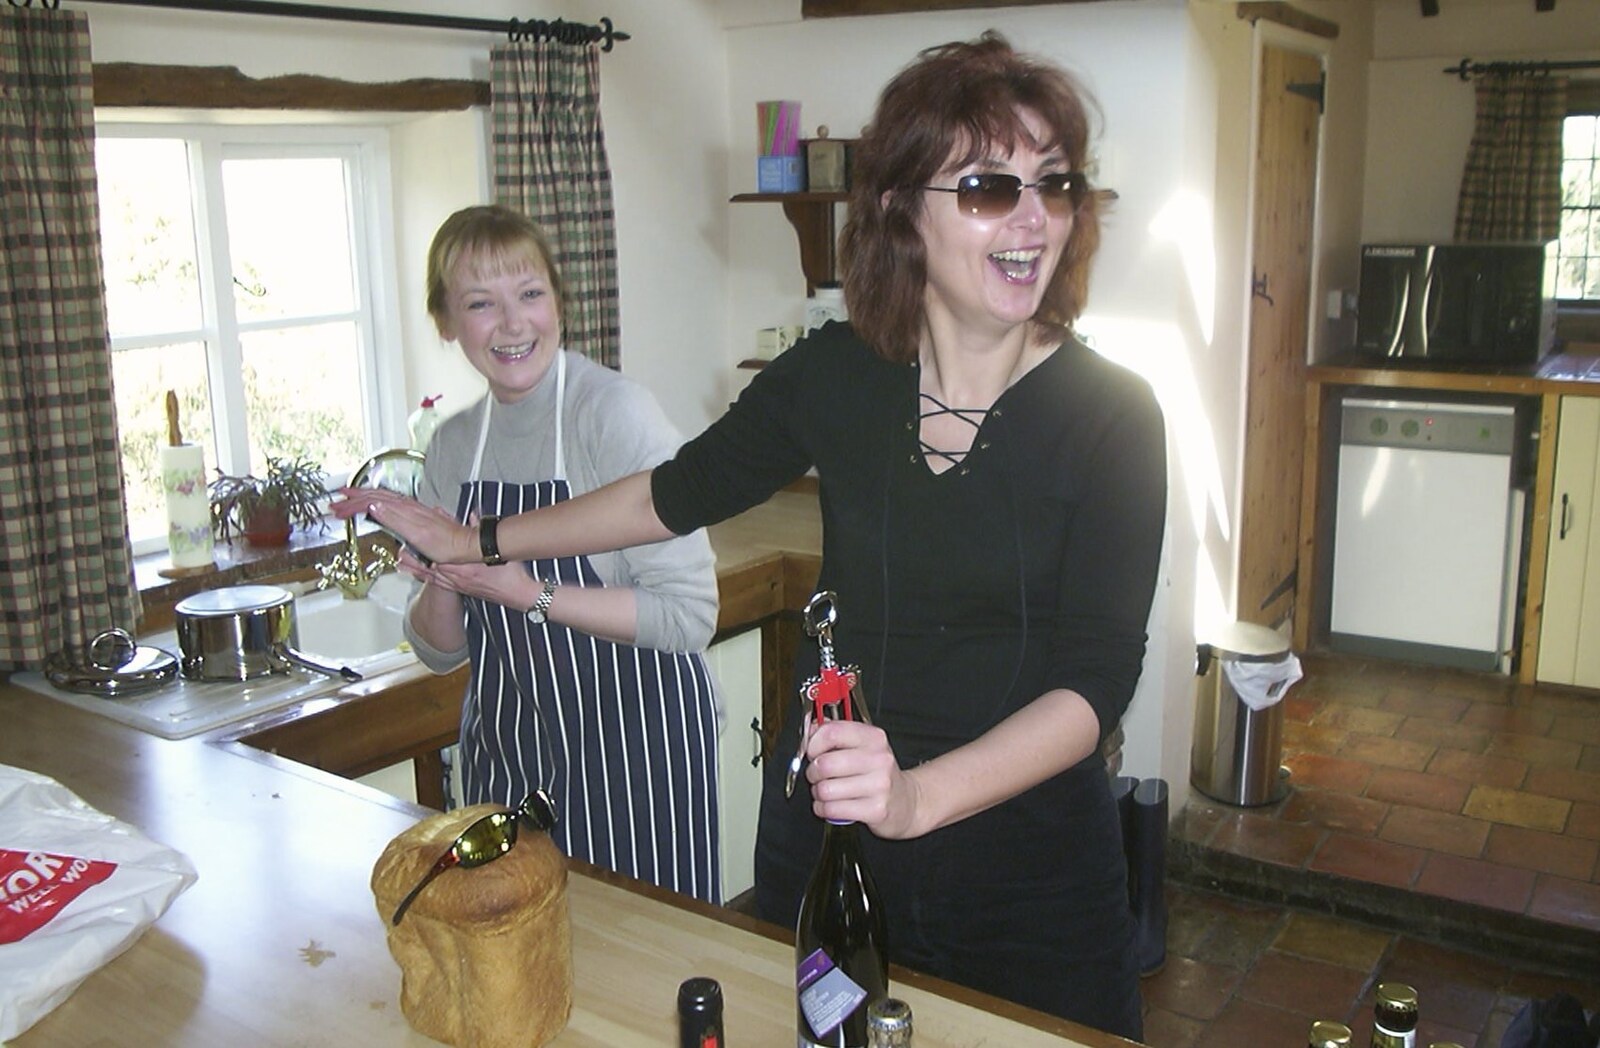 Anne cracks open a bottle of vino from Carolyn on Sunday, Wymondham, Norfolk - 23rd March 2003